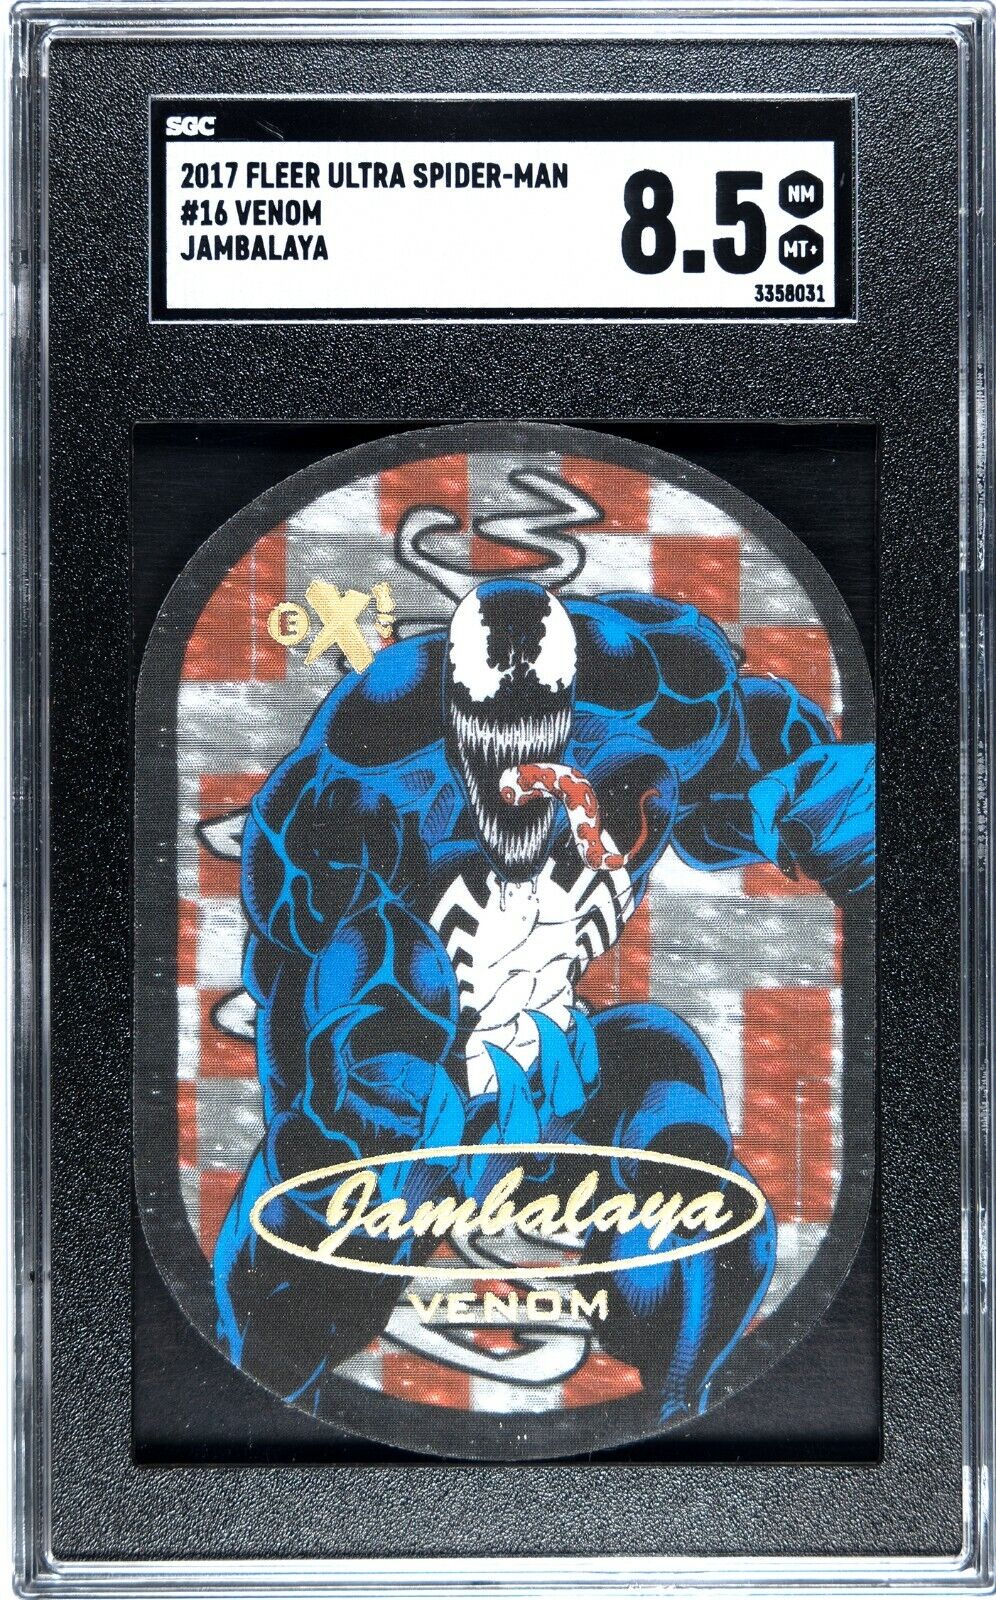 Venom 2017 Fleer Ultra Spider-Man - Jambalaya #16 SGC 8.5 SSP